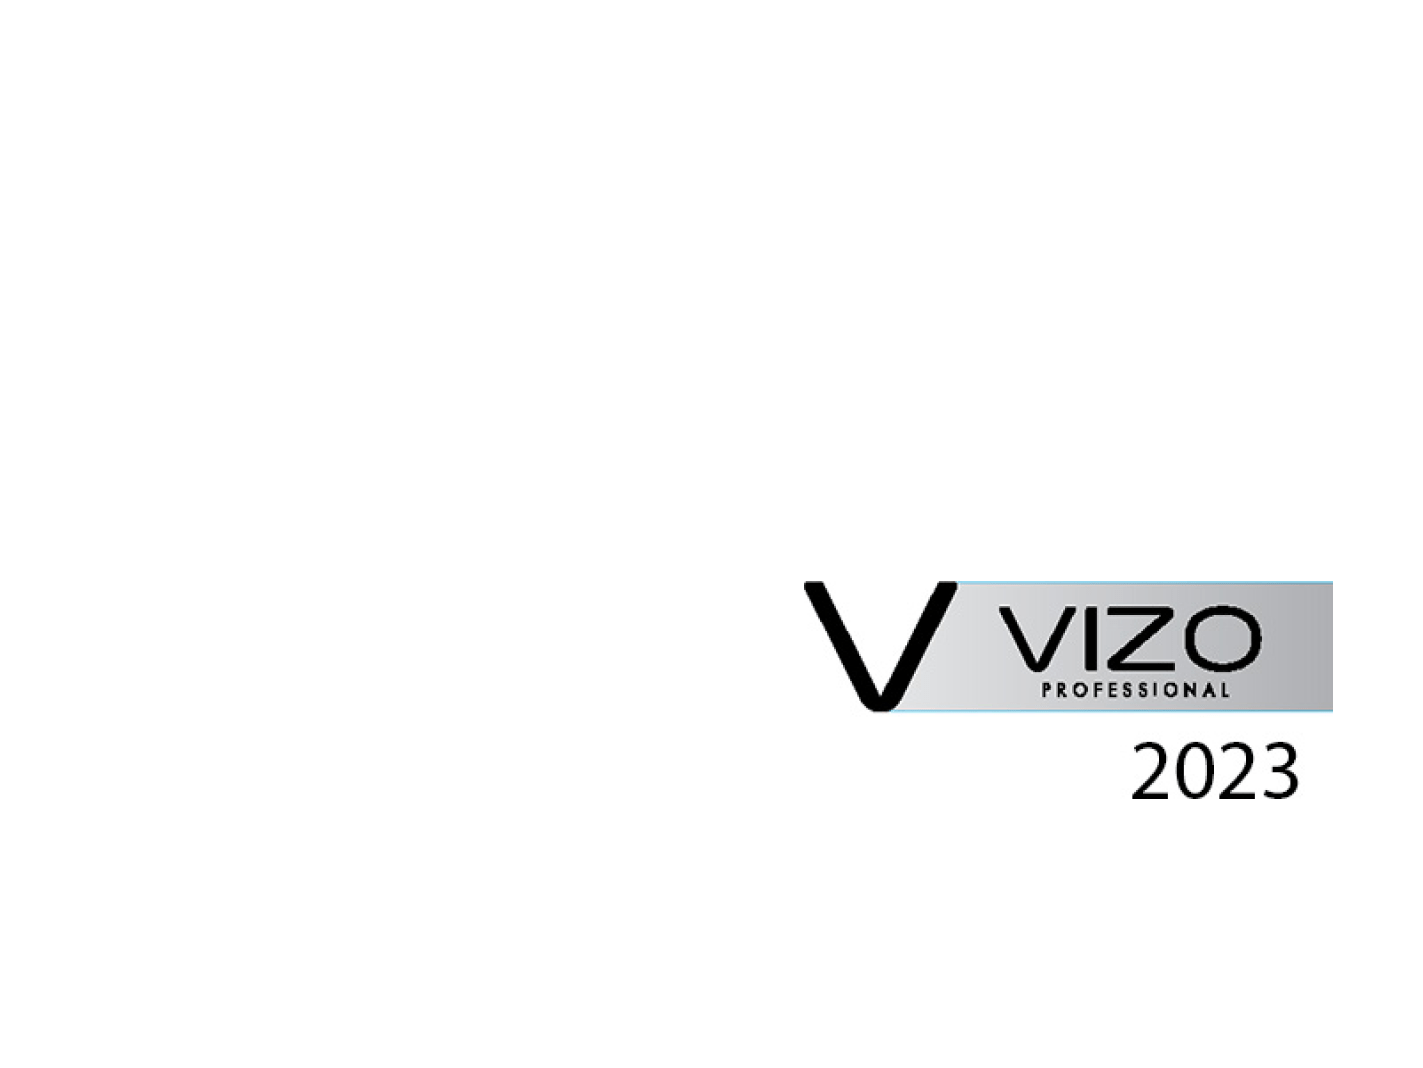 VIZO General Catalog 2023